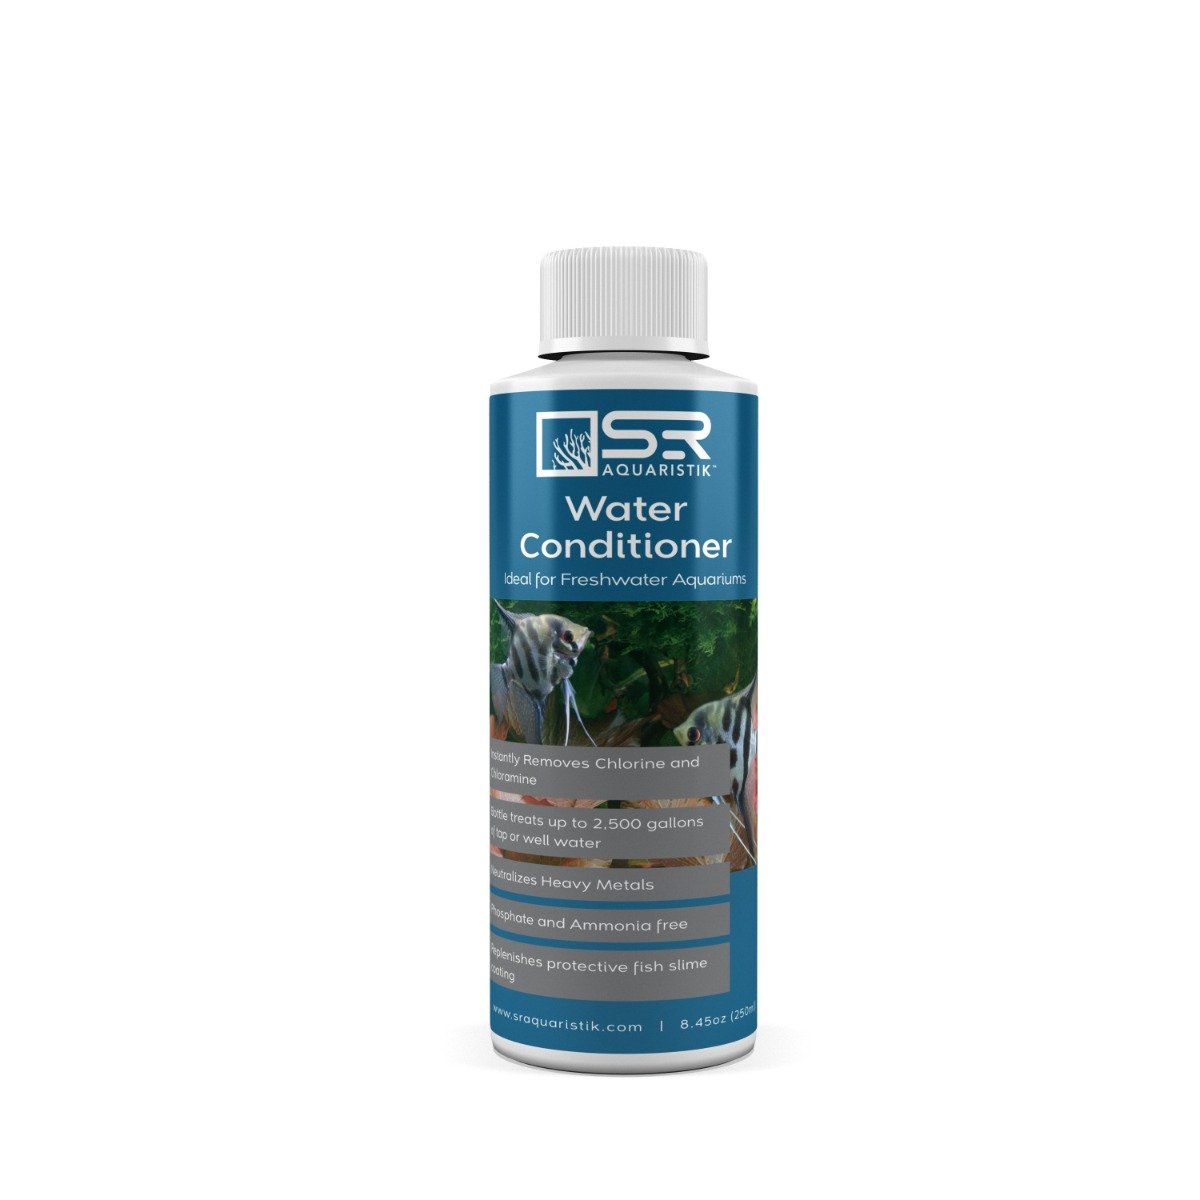 SR Aquaristik Water Conditioner (Freshwater)